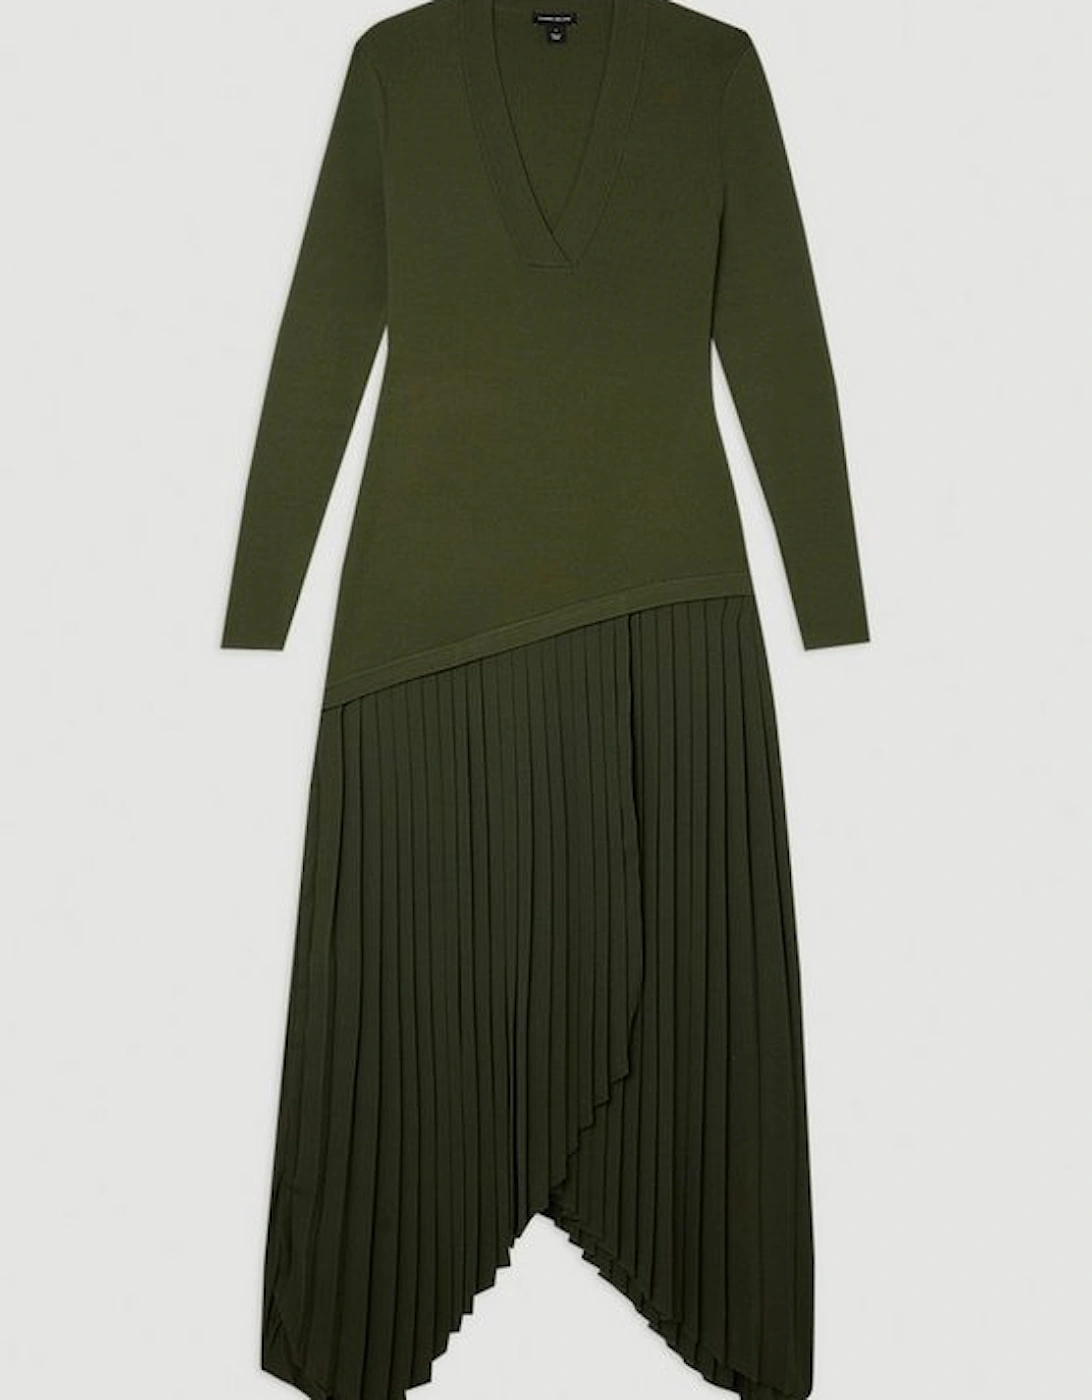 Viscose Blend Knit Mix Asymmetric Midaxi Dress